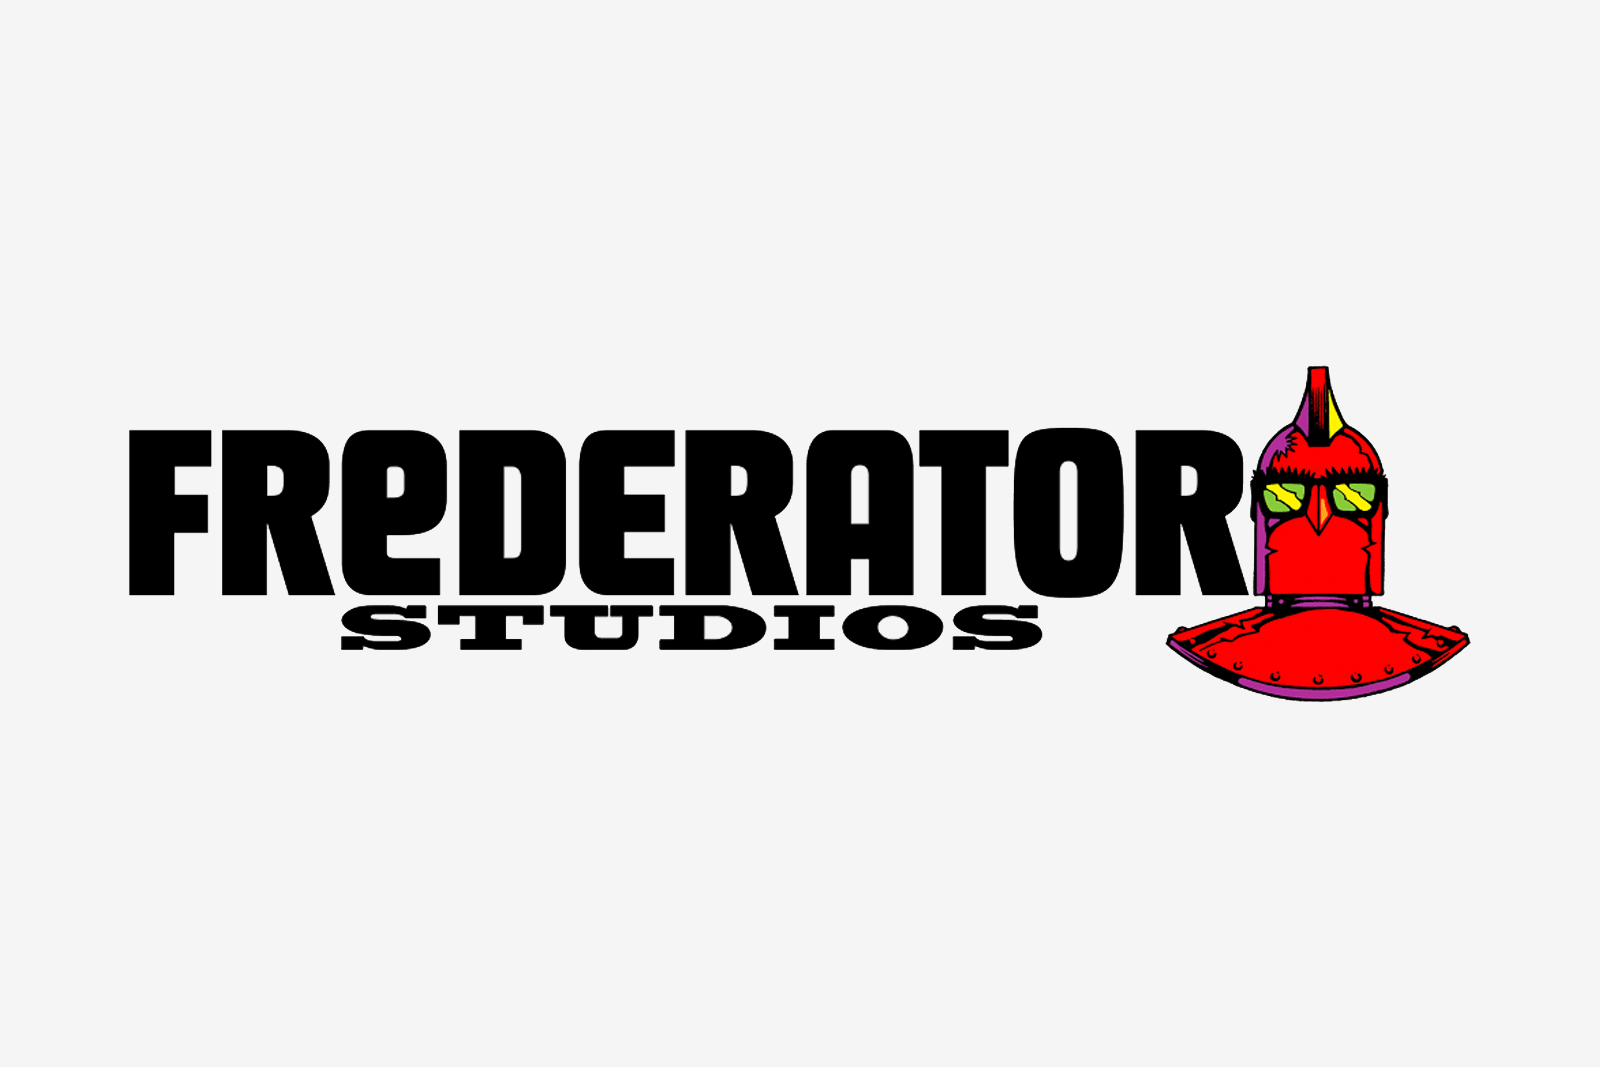 Frederator Studios